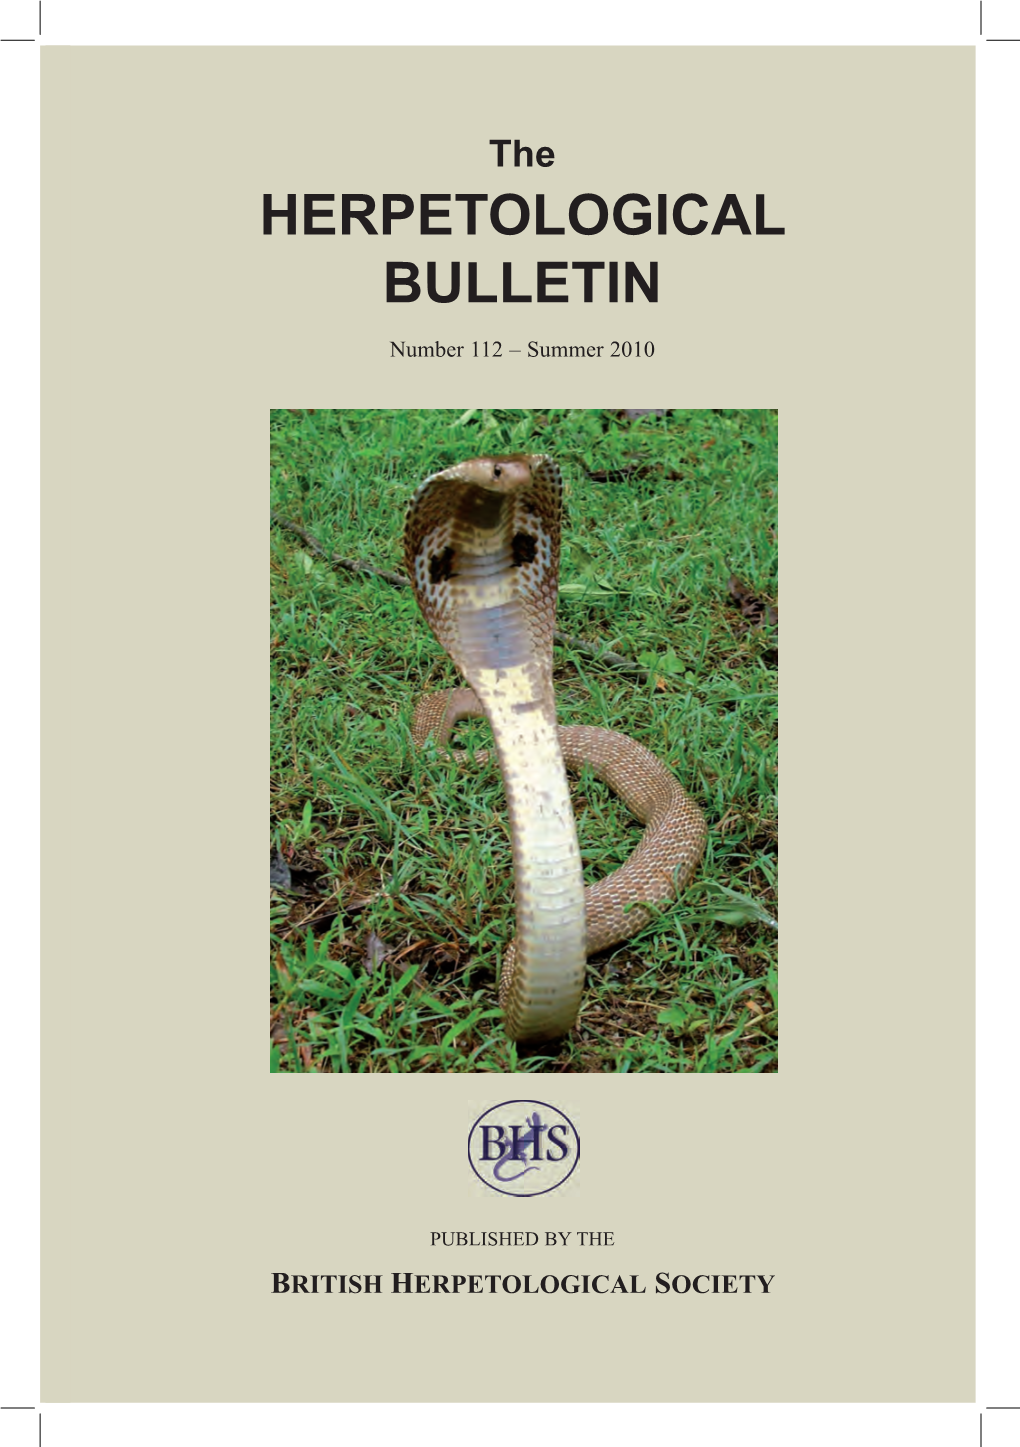 The HERPETOLOGICAL BULLETIN Number 112 – Summer 2010